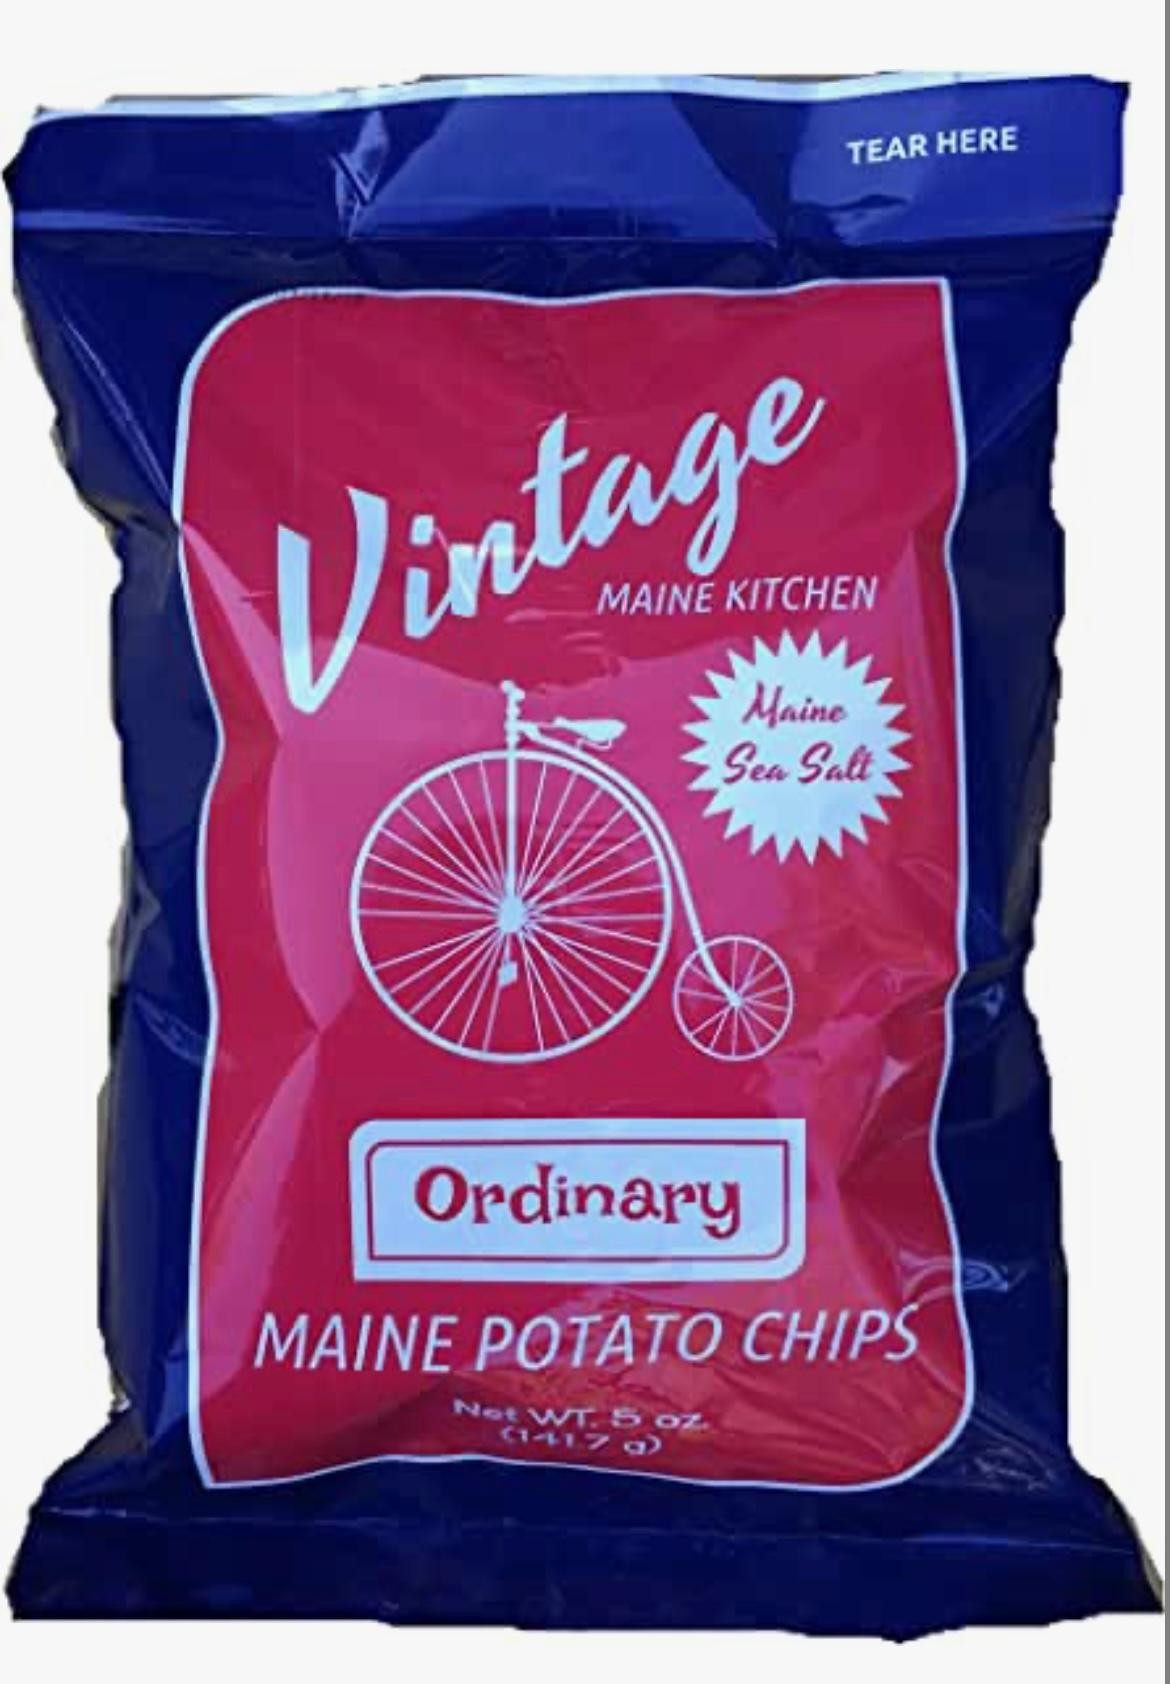 Large Bag Vintage Maine Kitchen "Ordinary" Potato Chips 5 oz